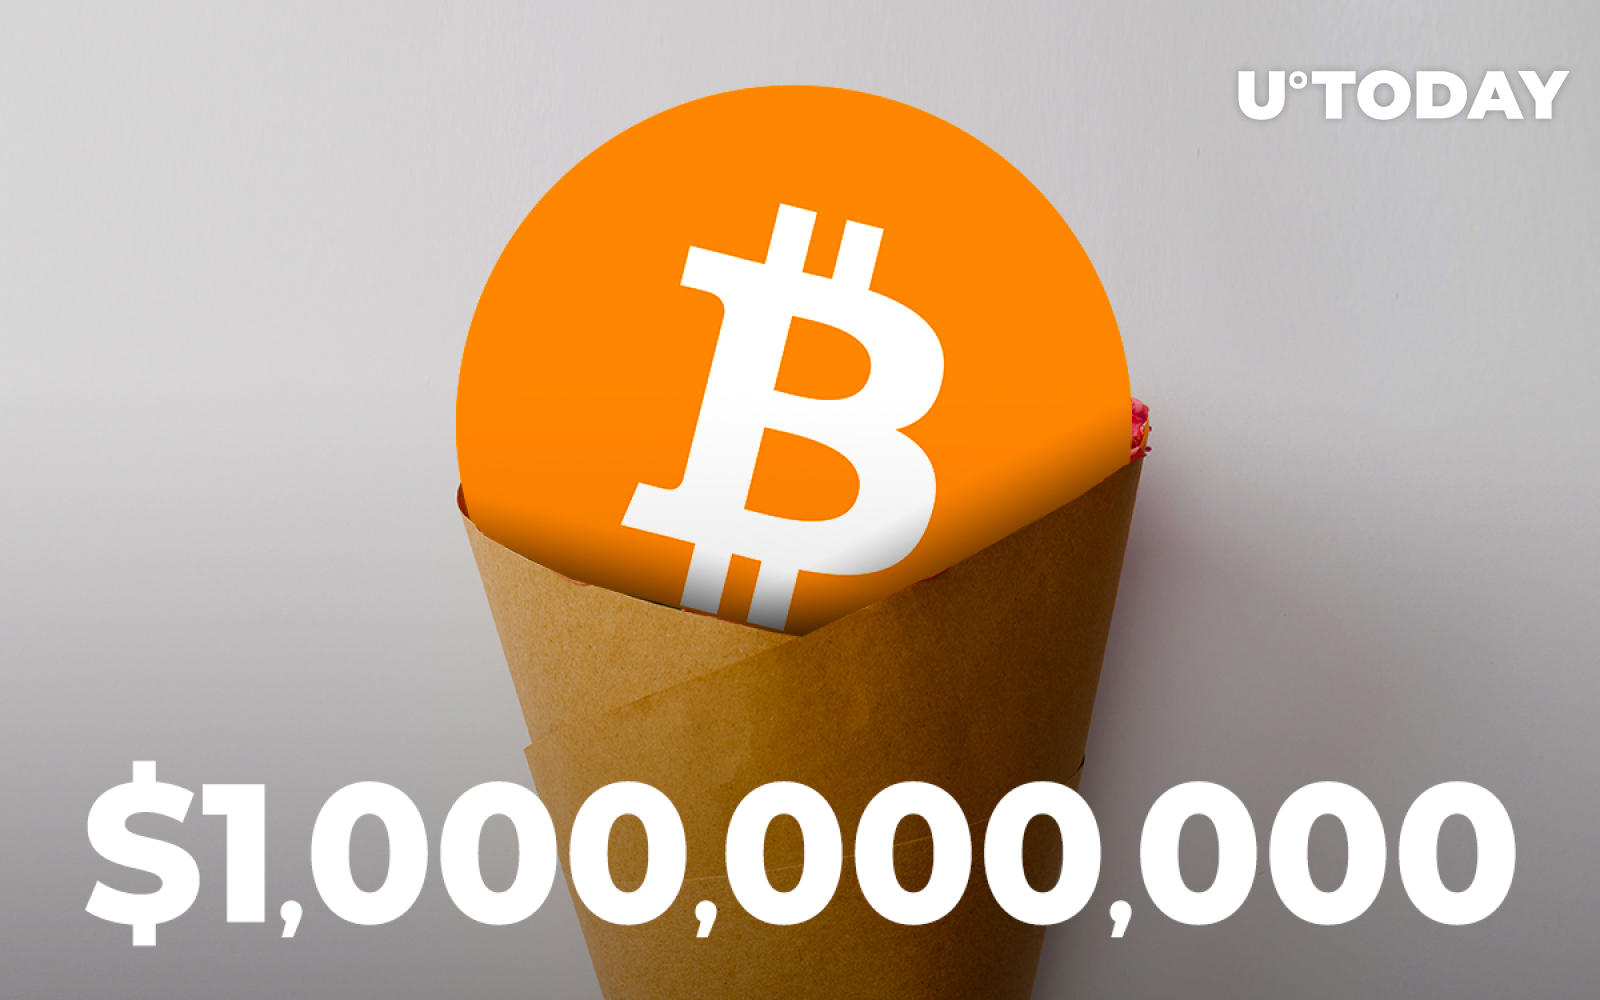 1000000000 bitcoins